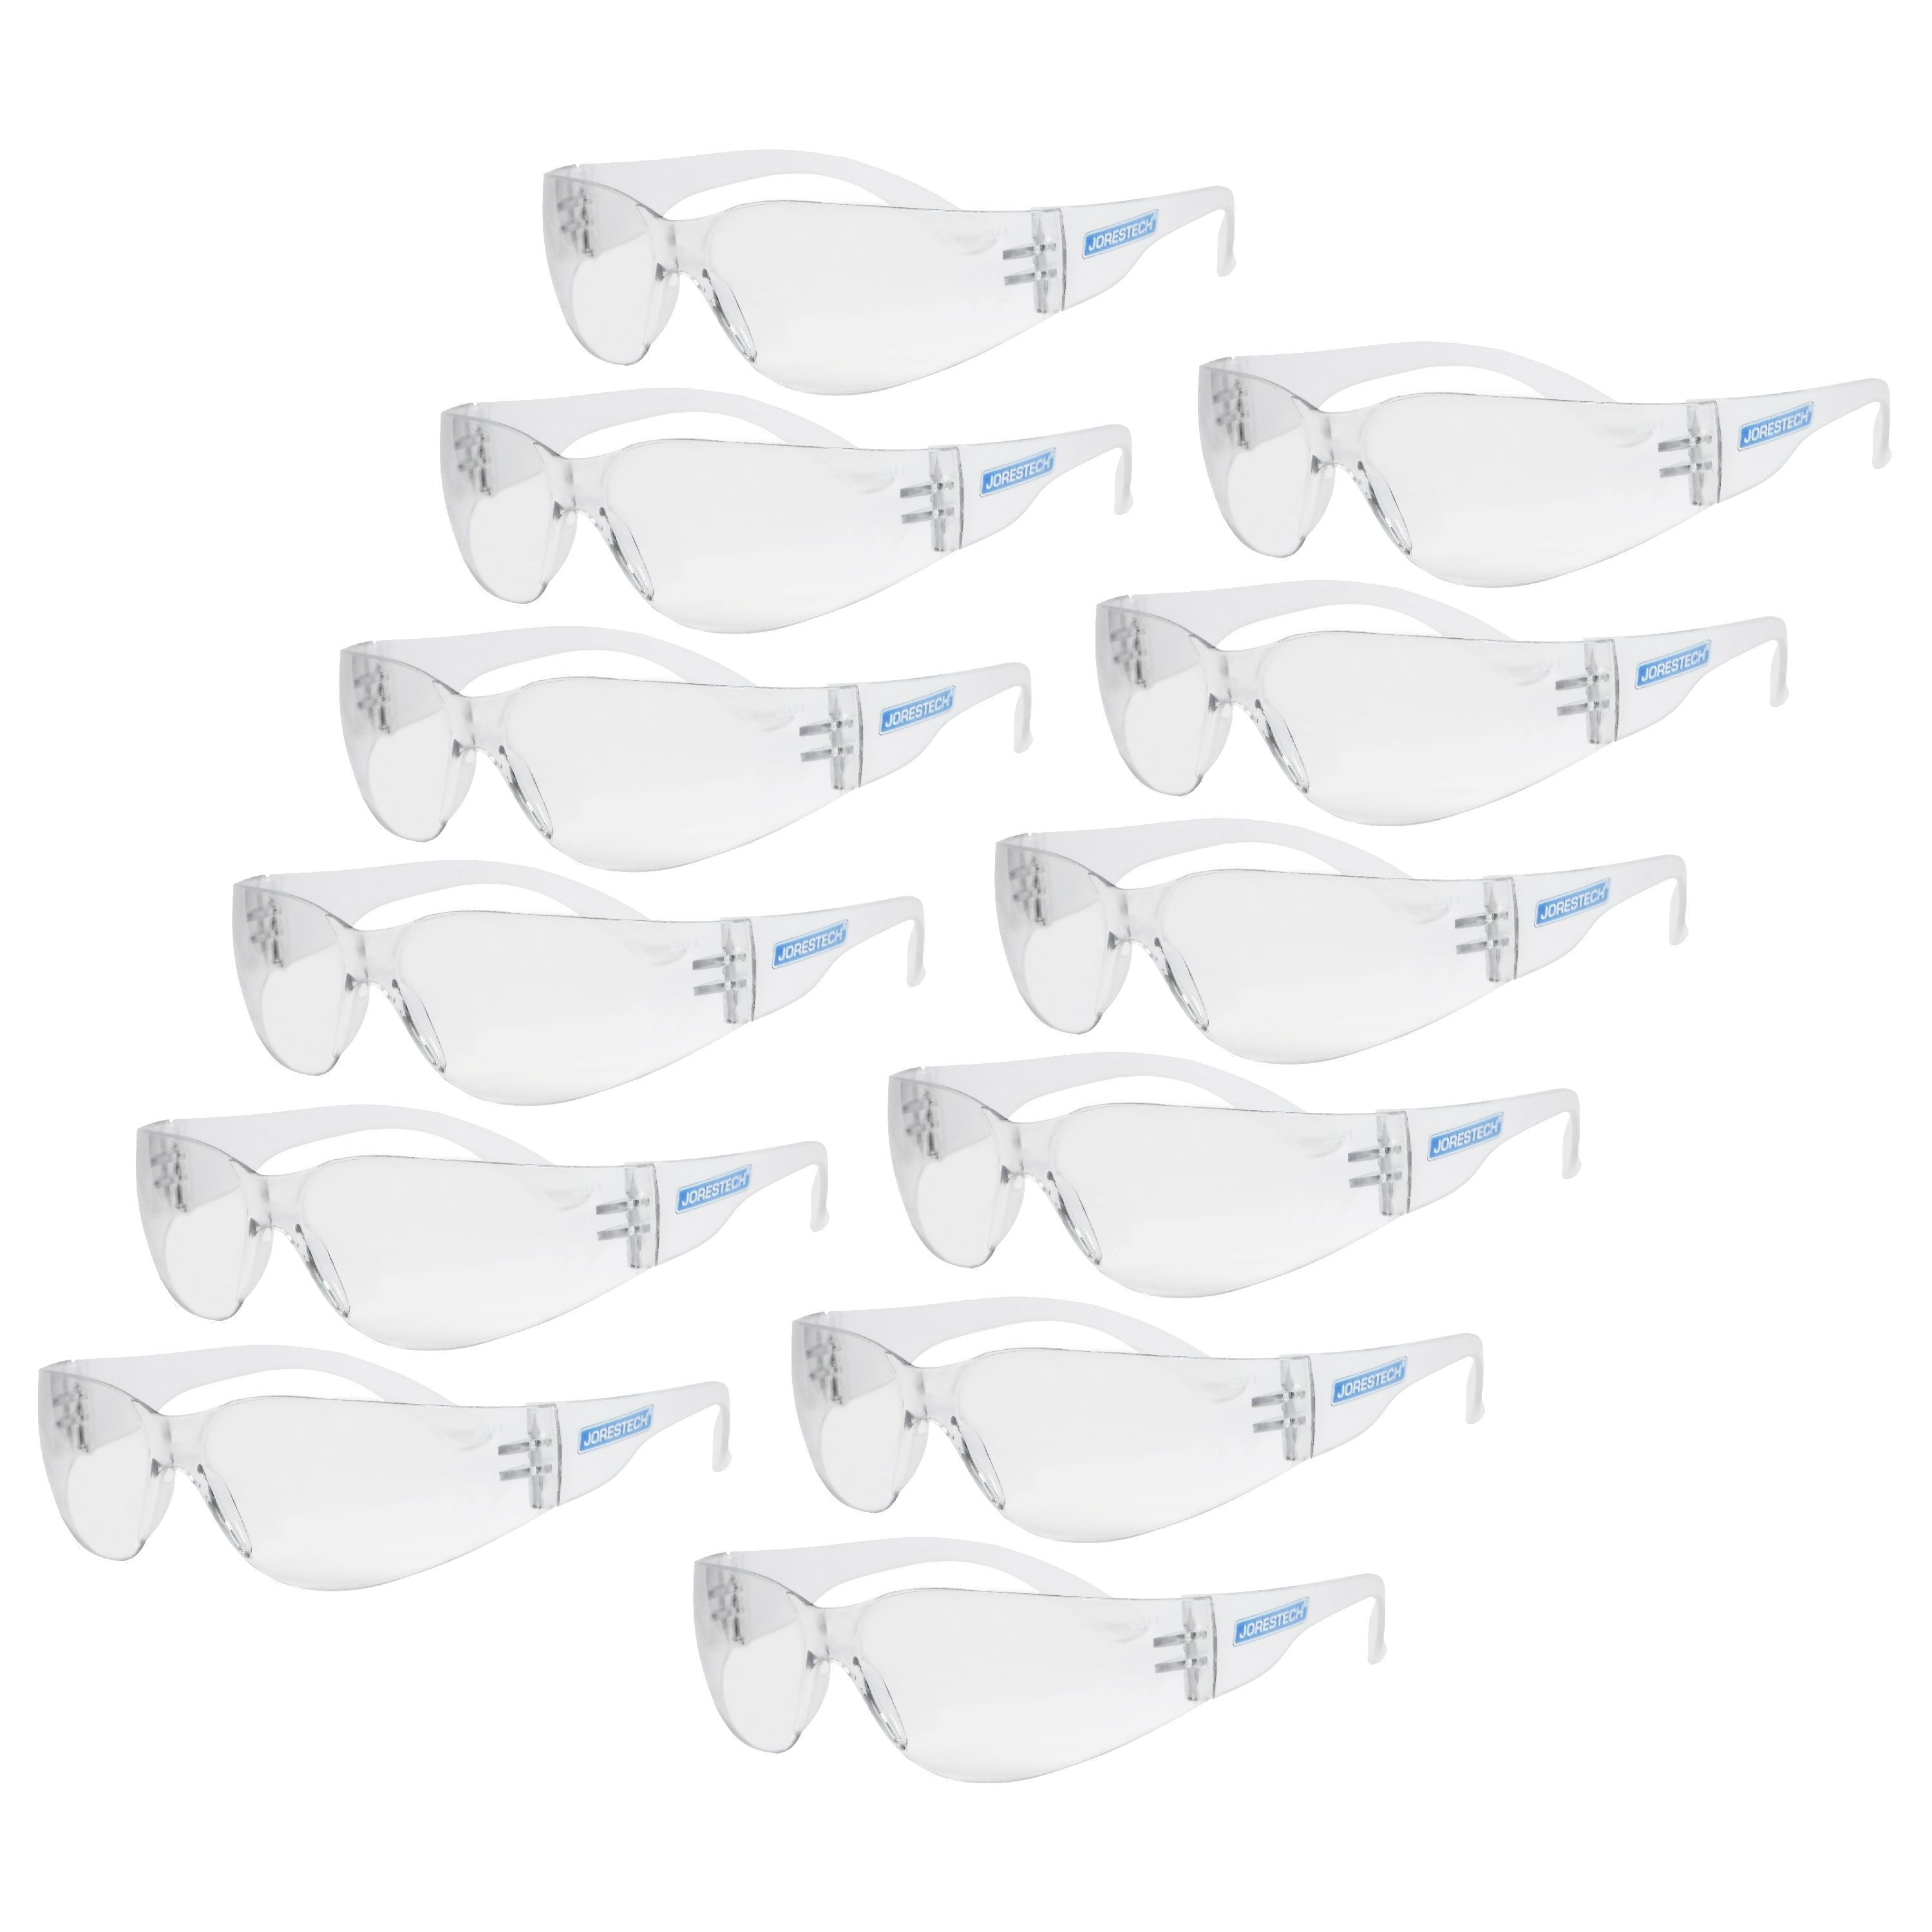 12PACK JORESTECH Vision BLUE frame clear Lens Safety Glasses Sunglasses Z87 